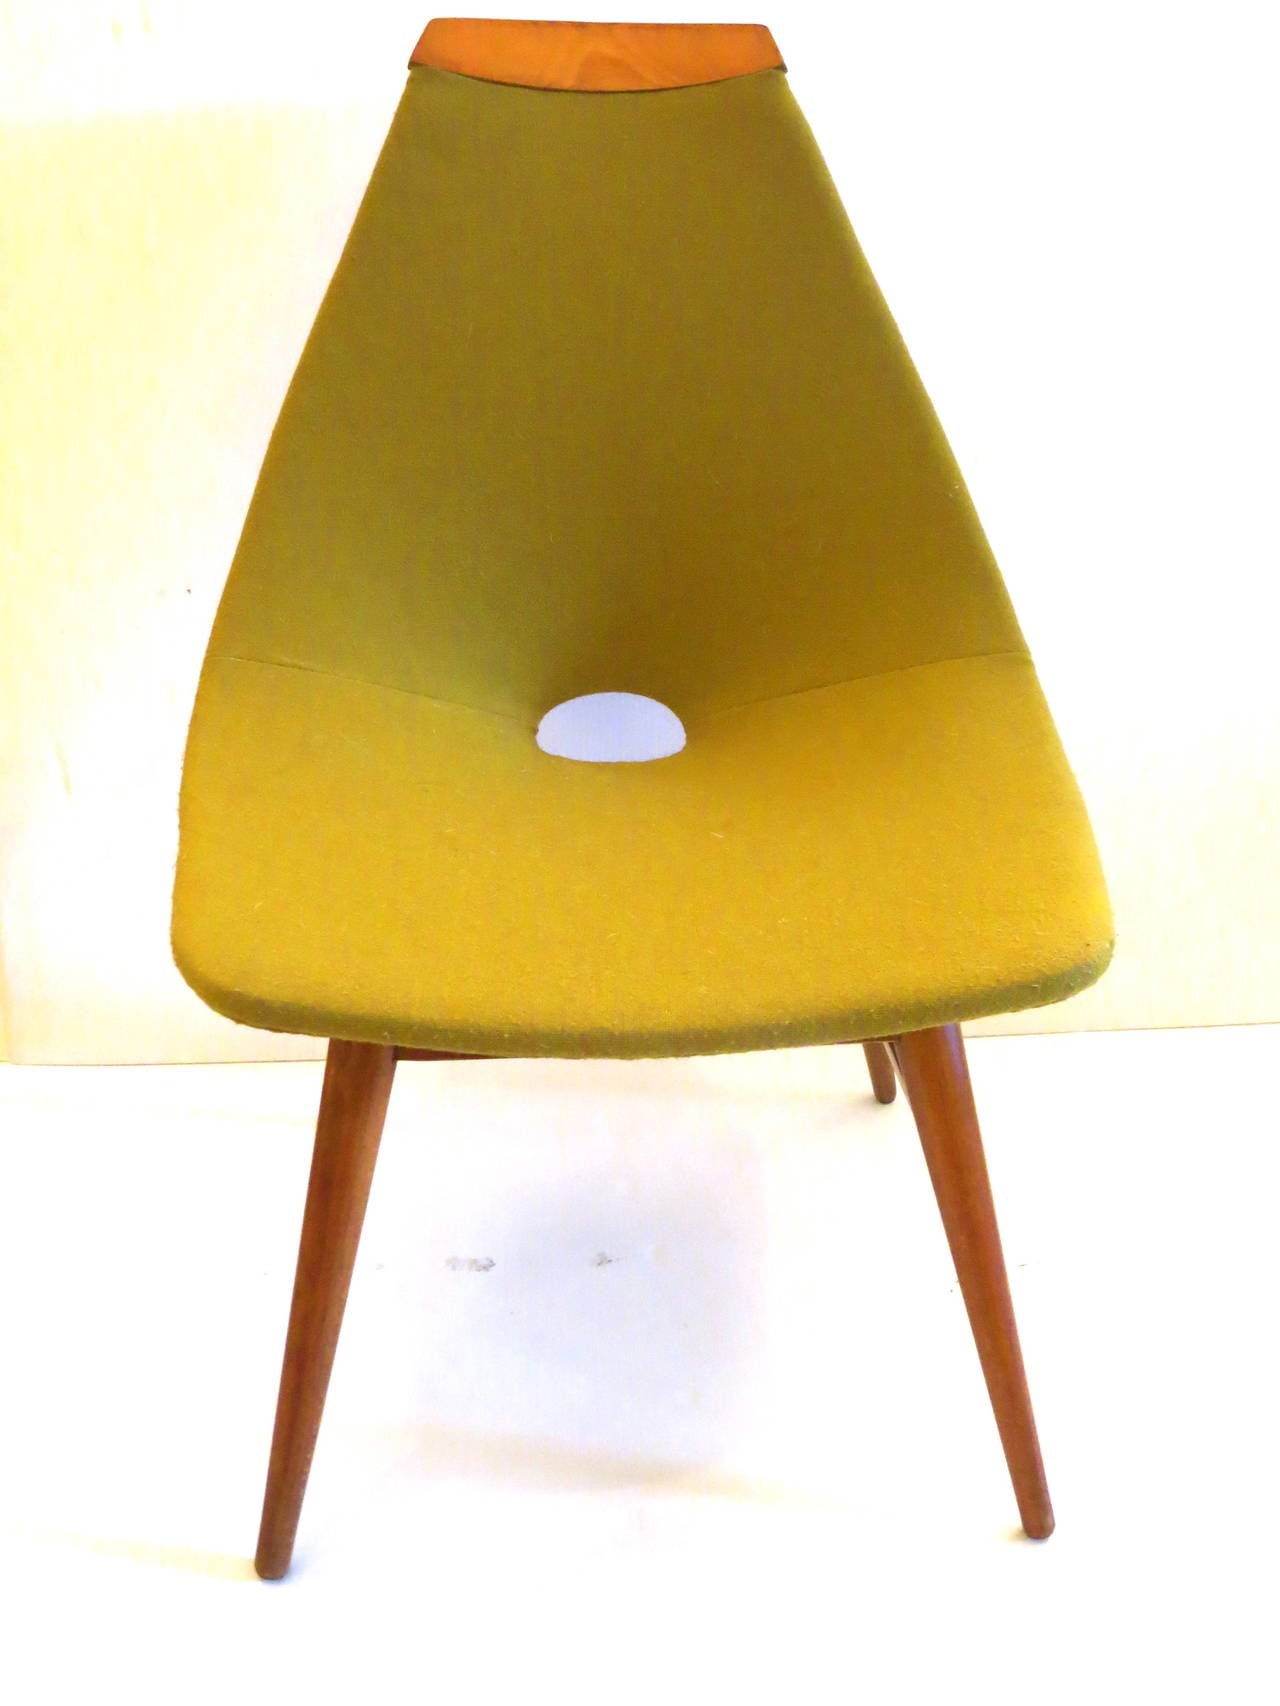 American 1950s Atomic design Danish Modern armless rare low lounge chair